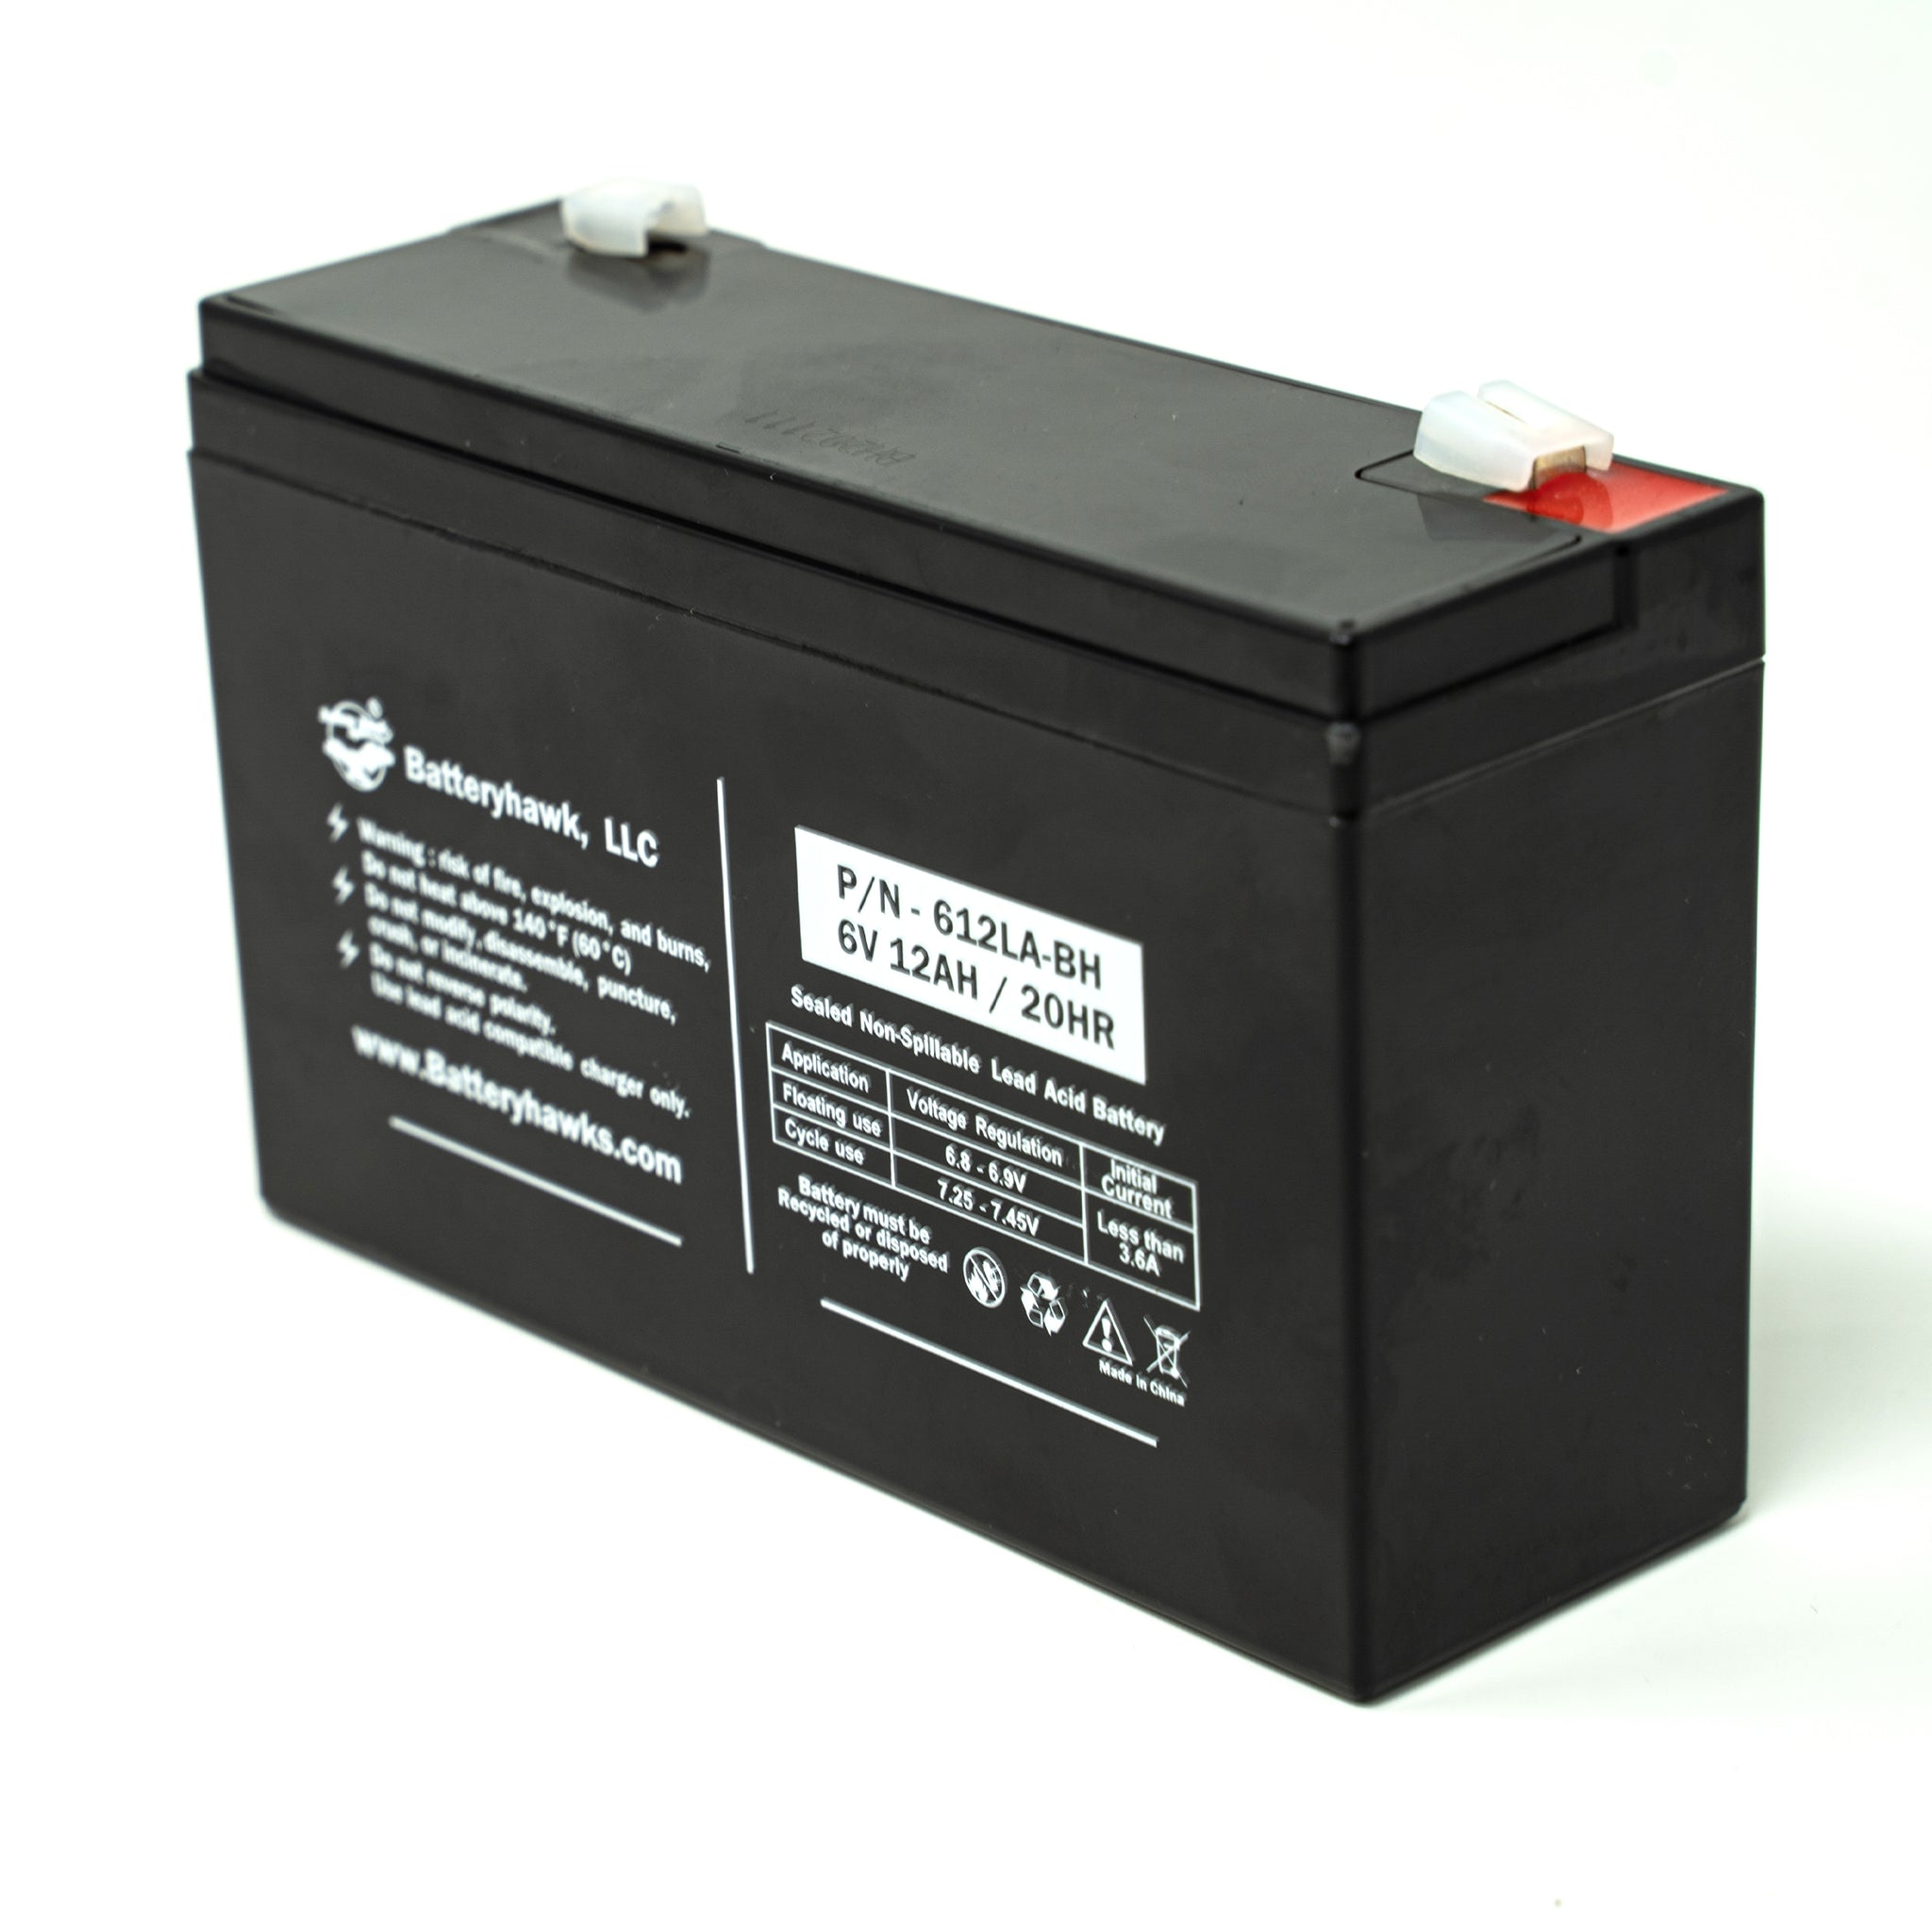 6V 12AH SLA F1 Terminal Sealed Lead Acid Battery for Exit Sign Emergen –  Batteryhawk, LLC